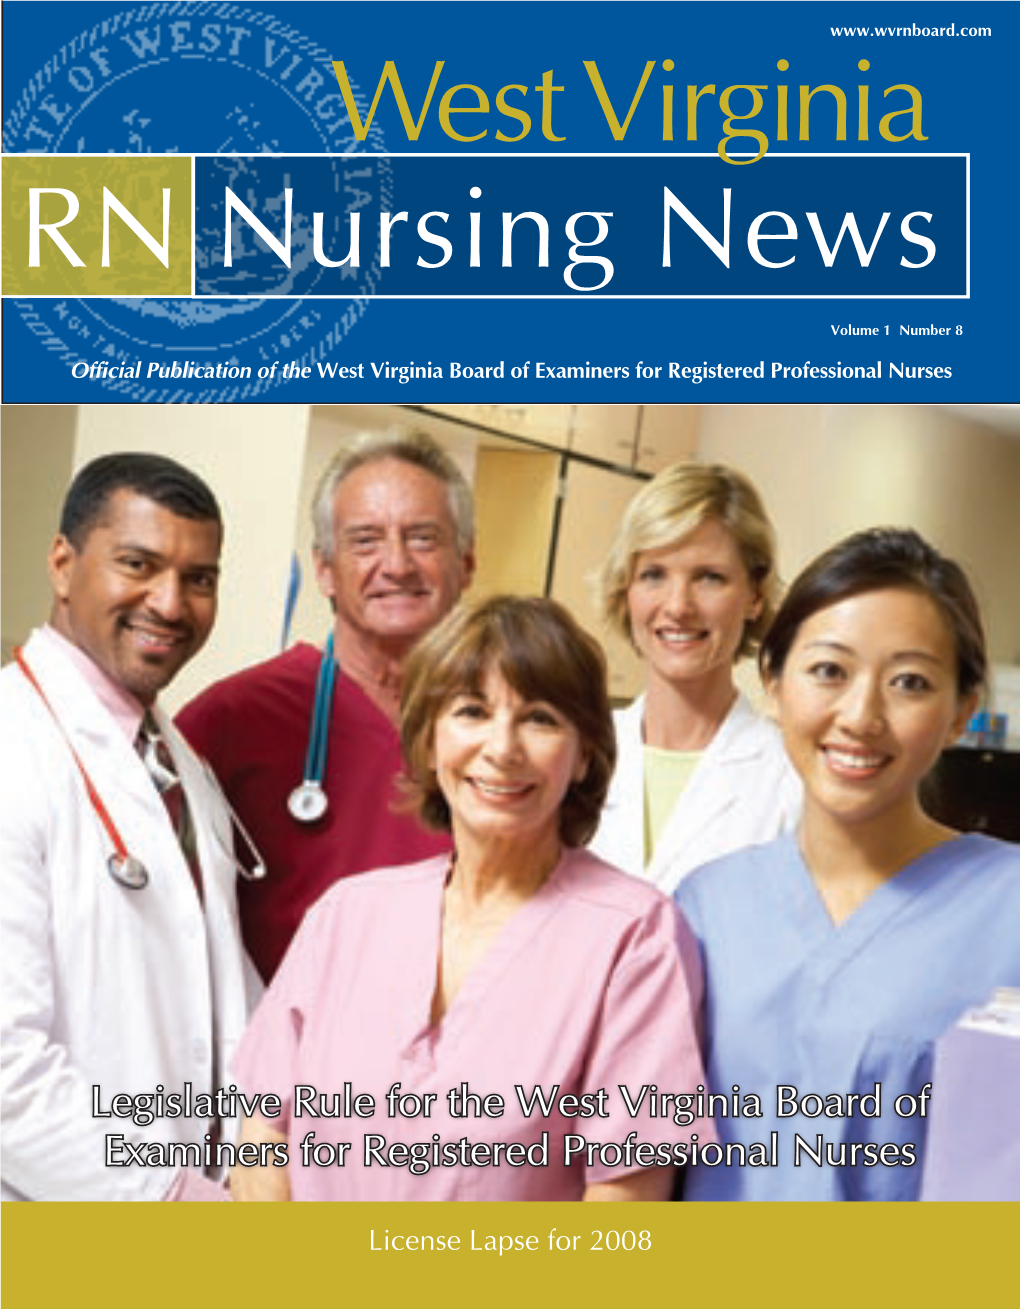 West Virginia RN Nursing News